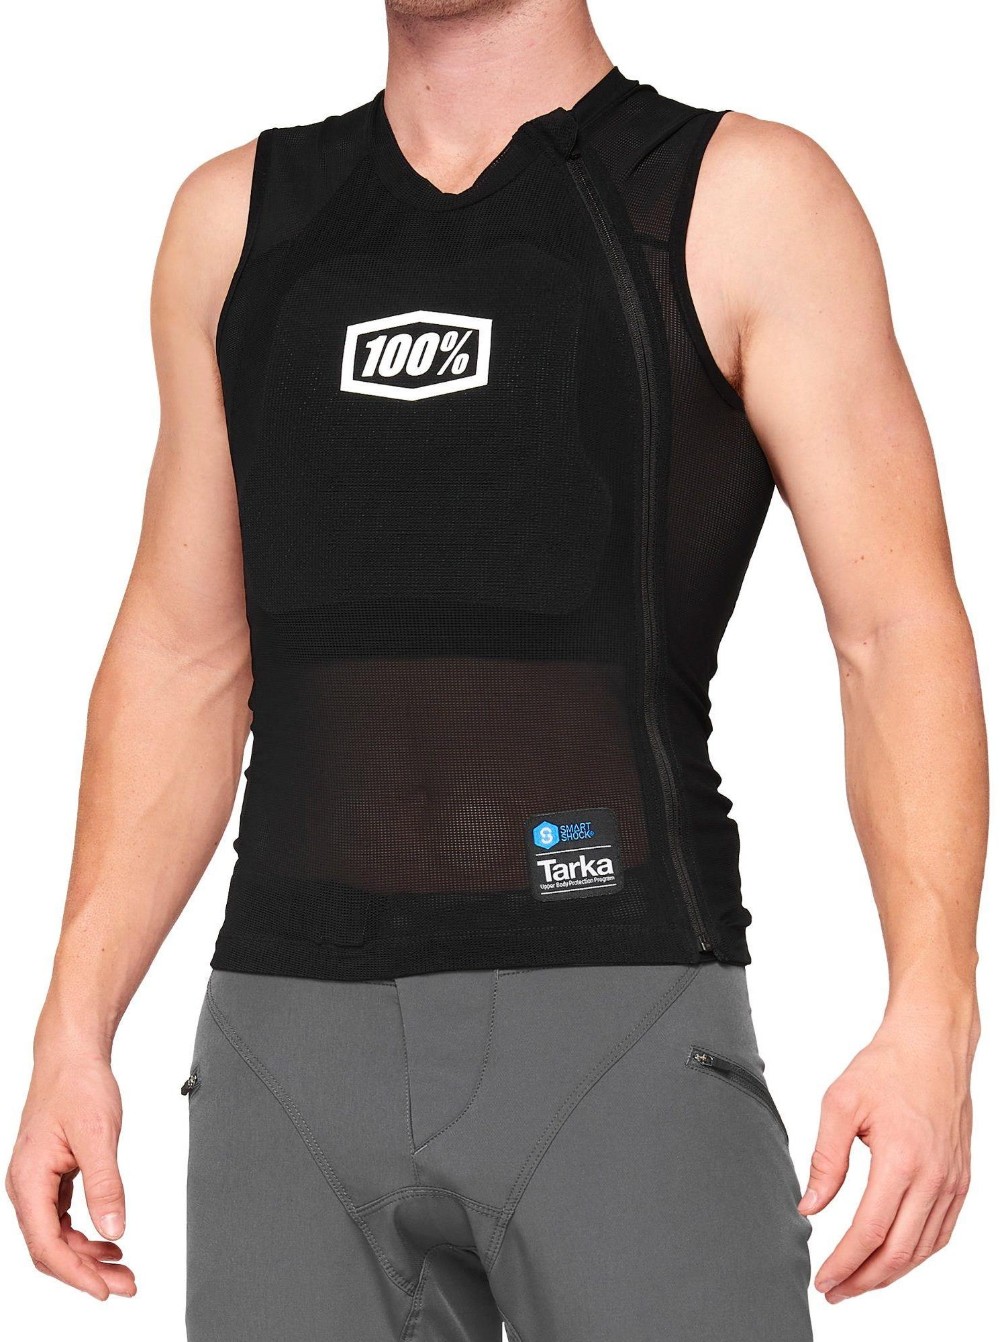 Tarka Protection Vest image 0